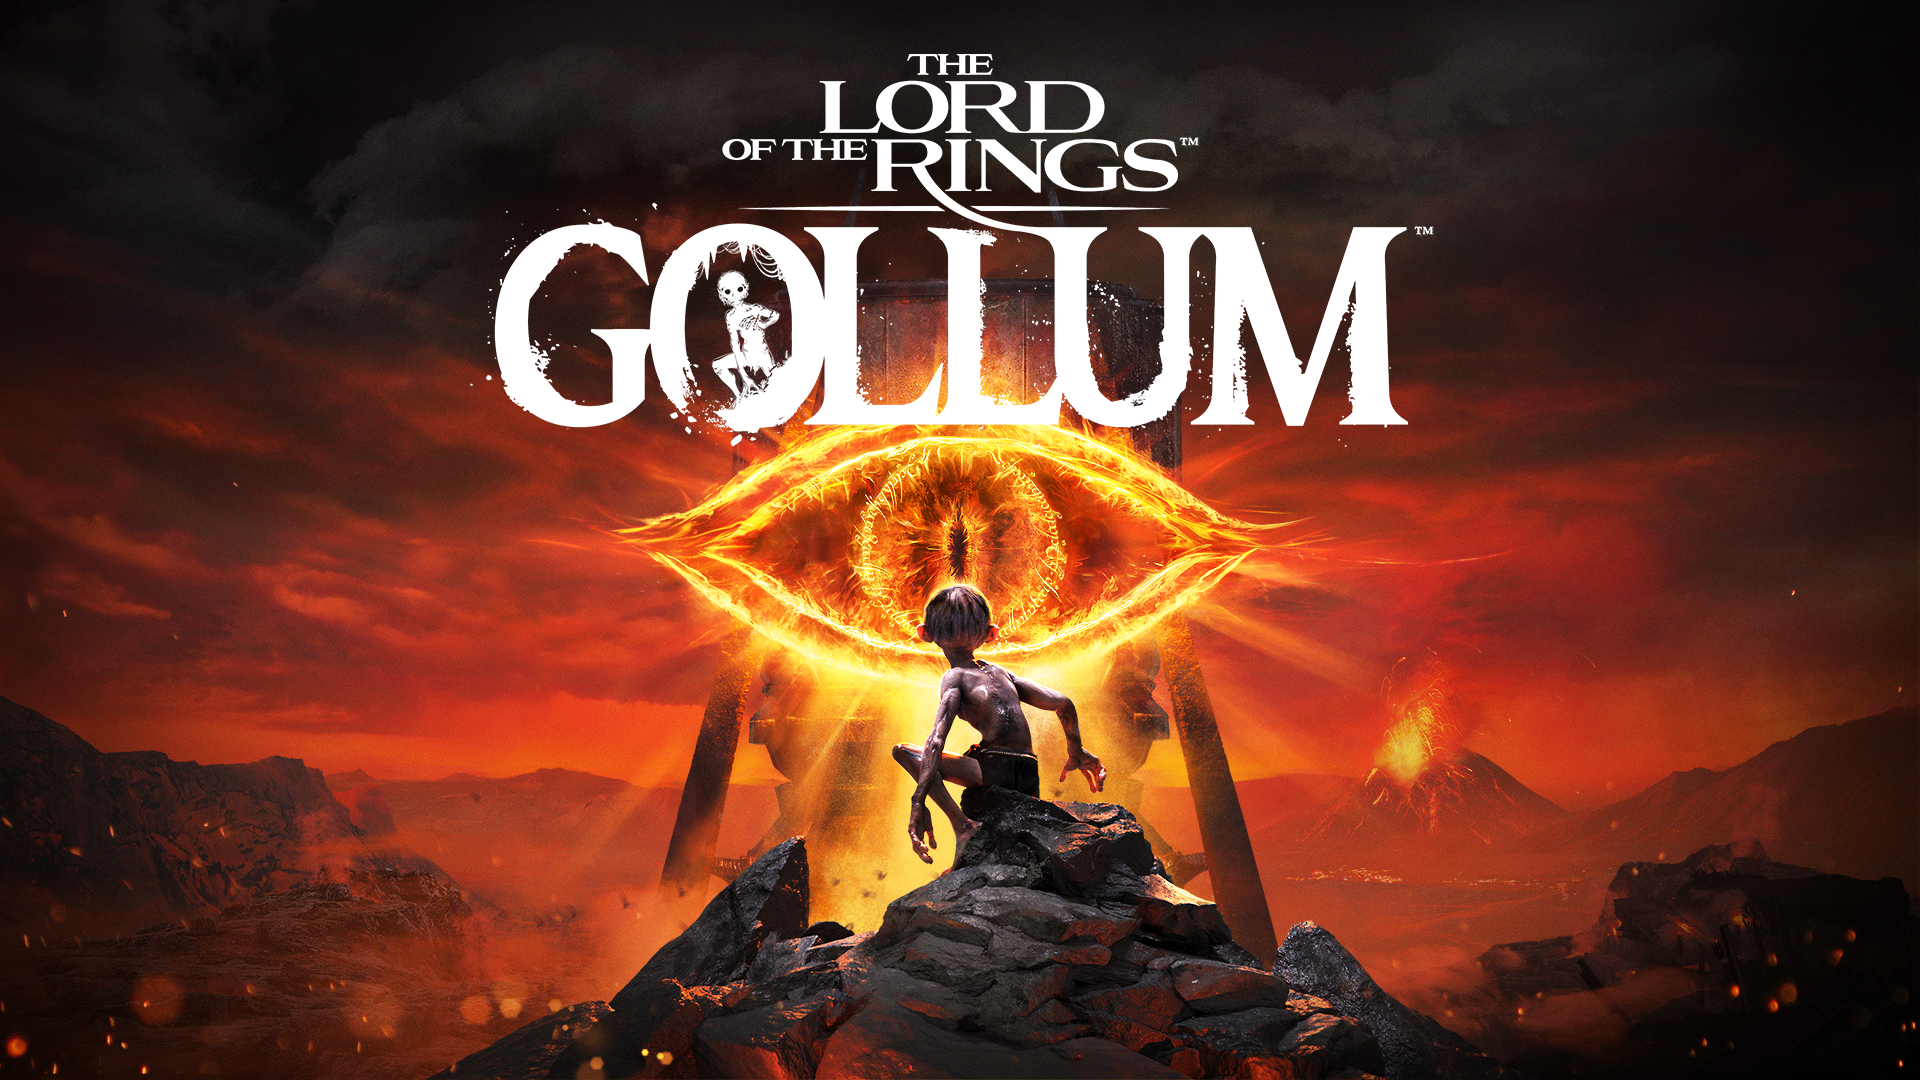 Image for The Lord of the Rings: Gollum má konečně pevný termín